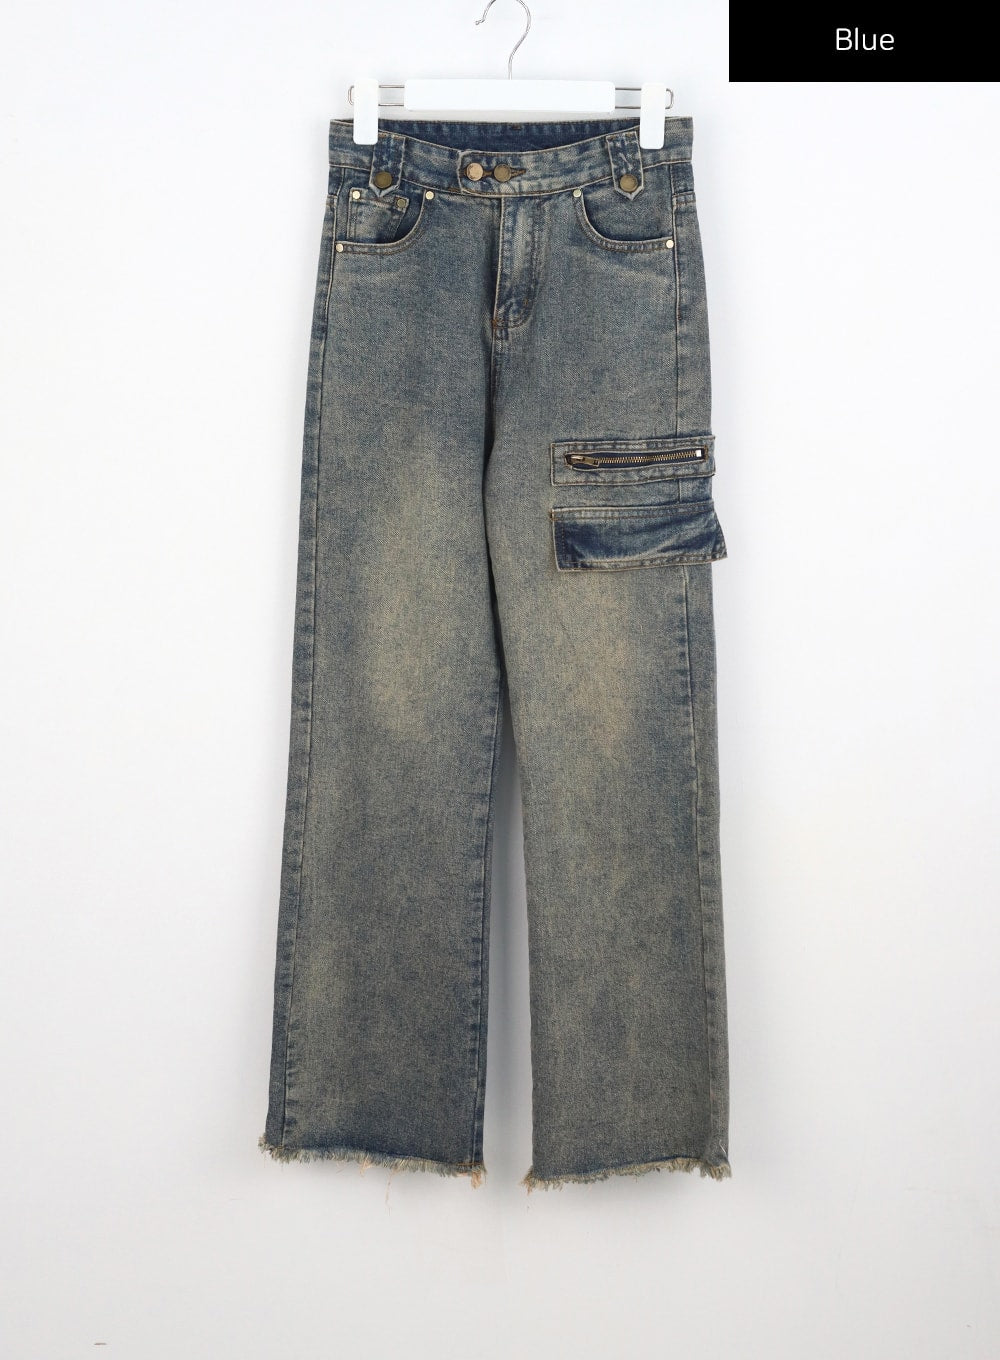 zipper-detail-jeans-cy325